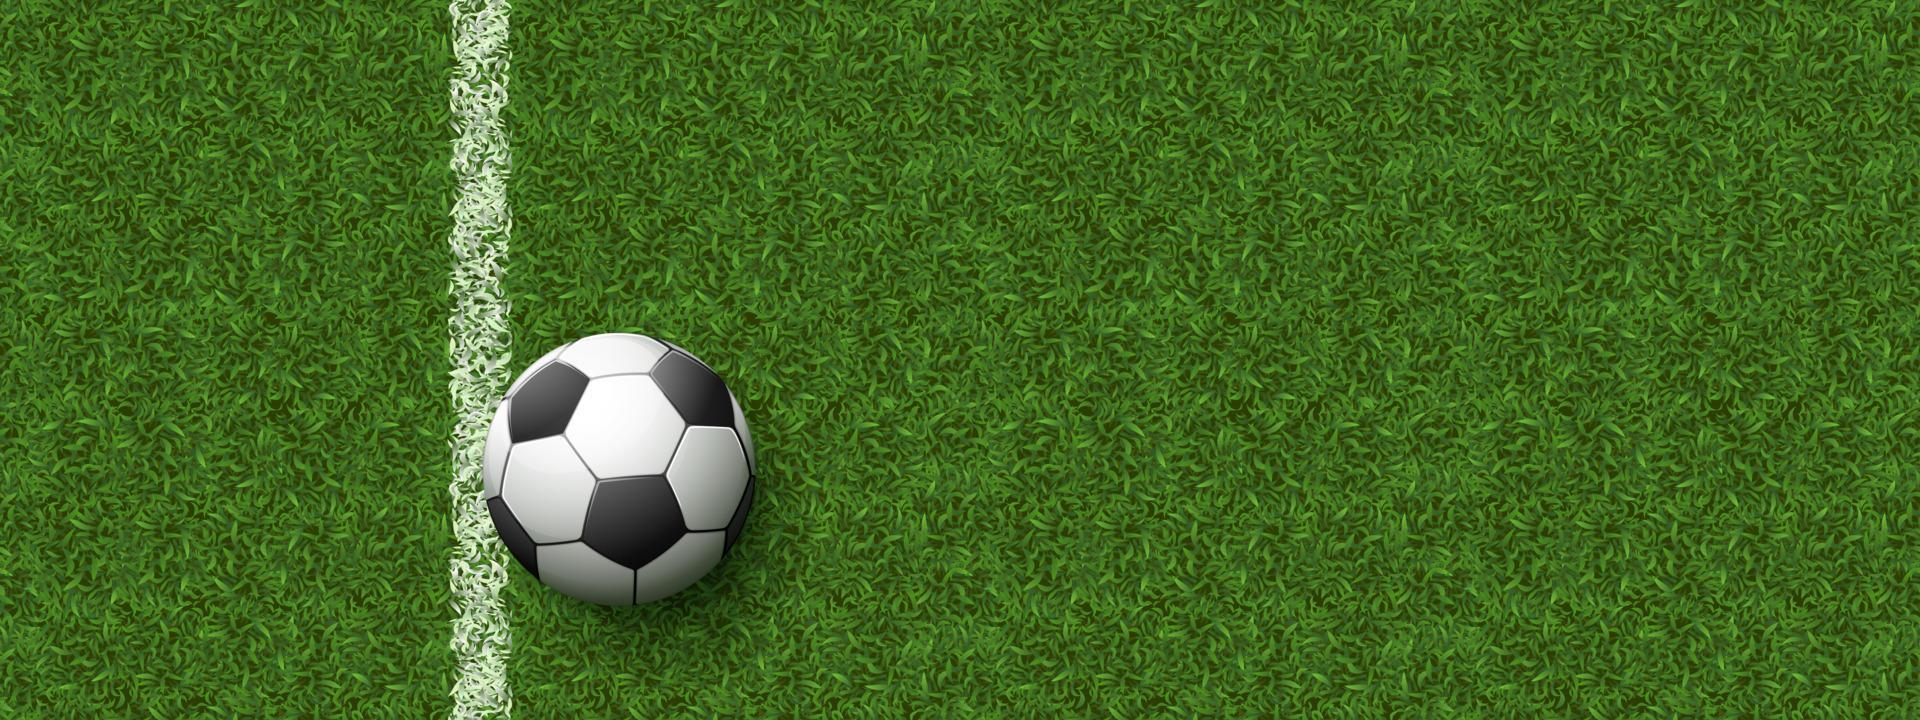 voetbal bal Aan veld- met groen gras vector